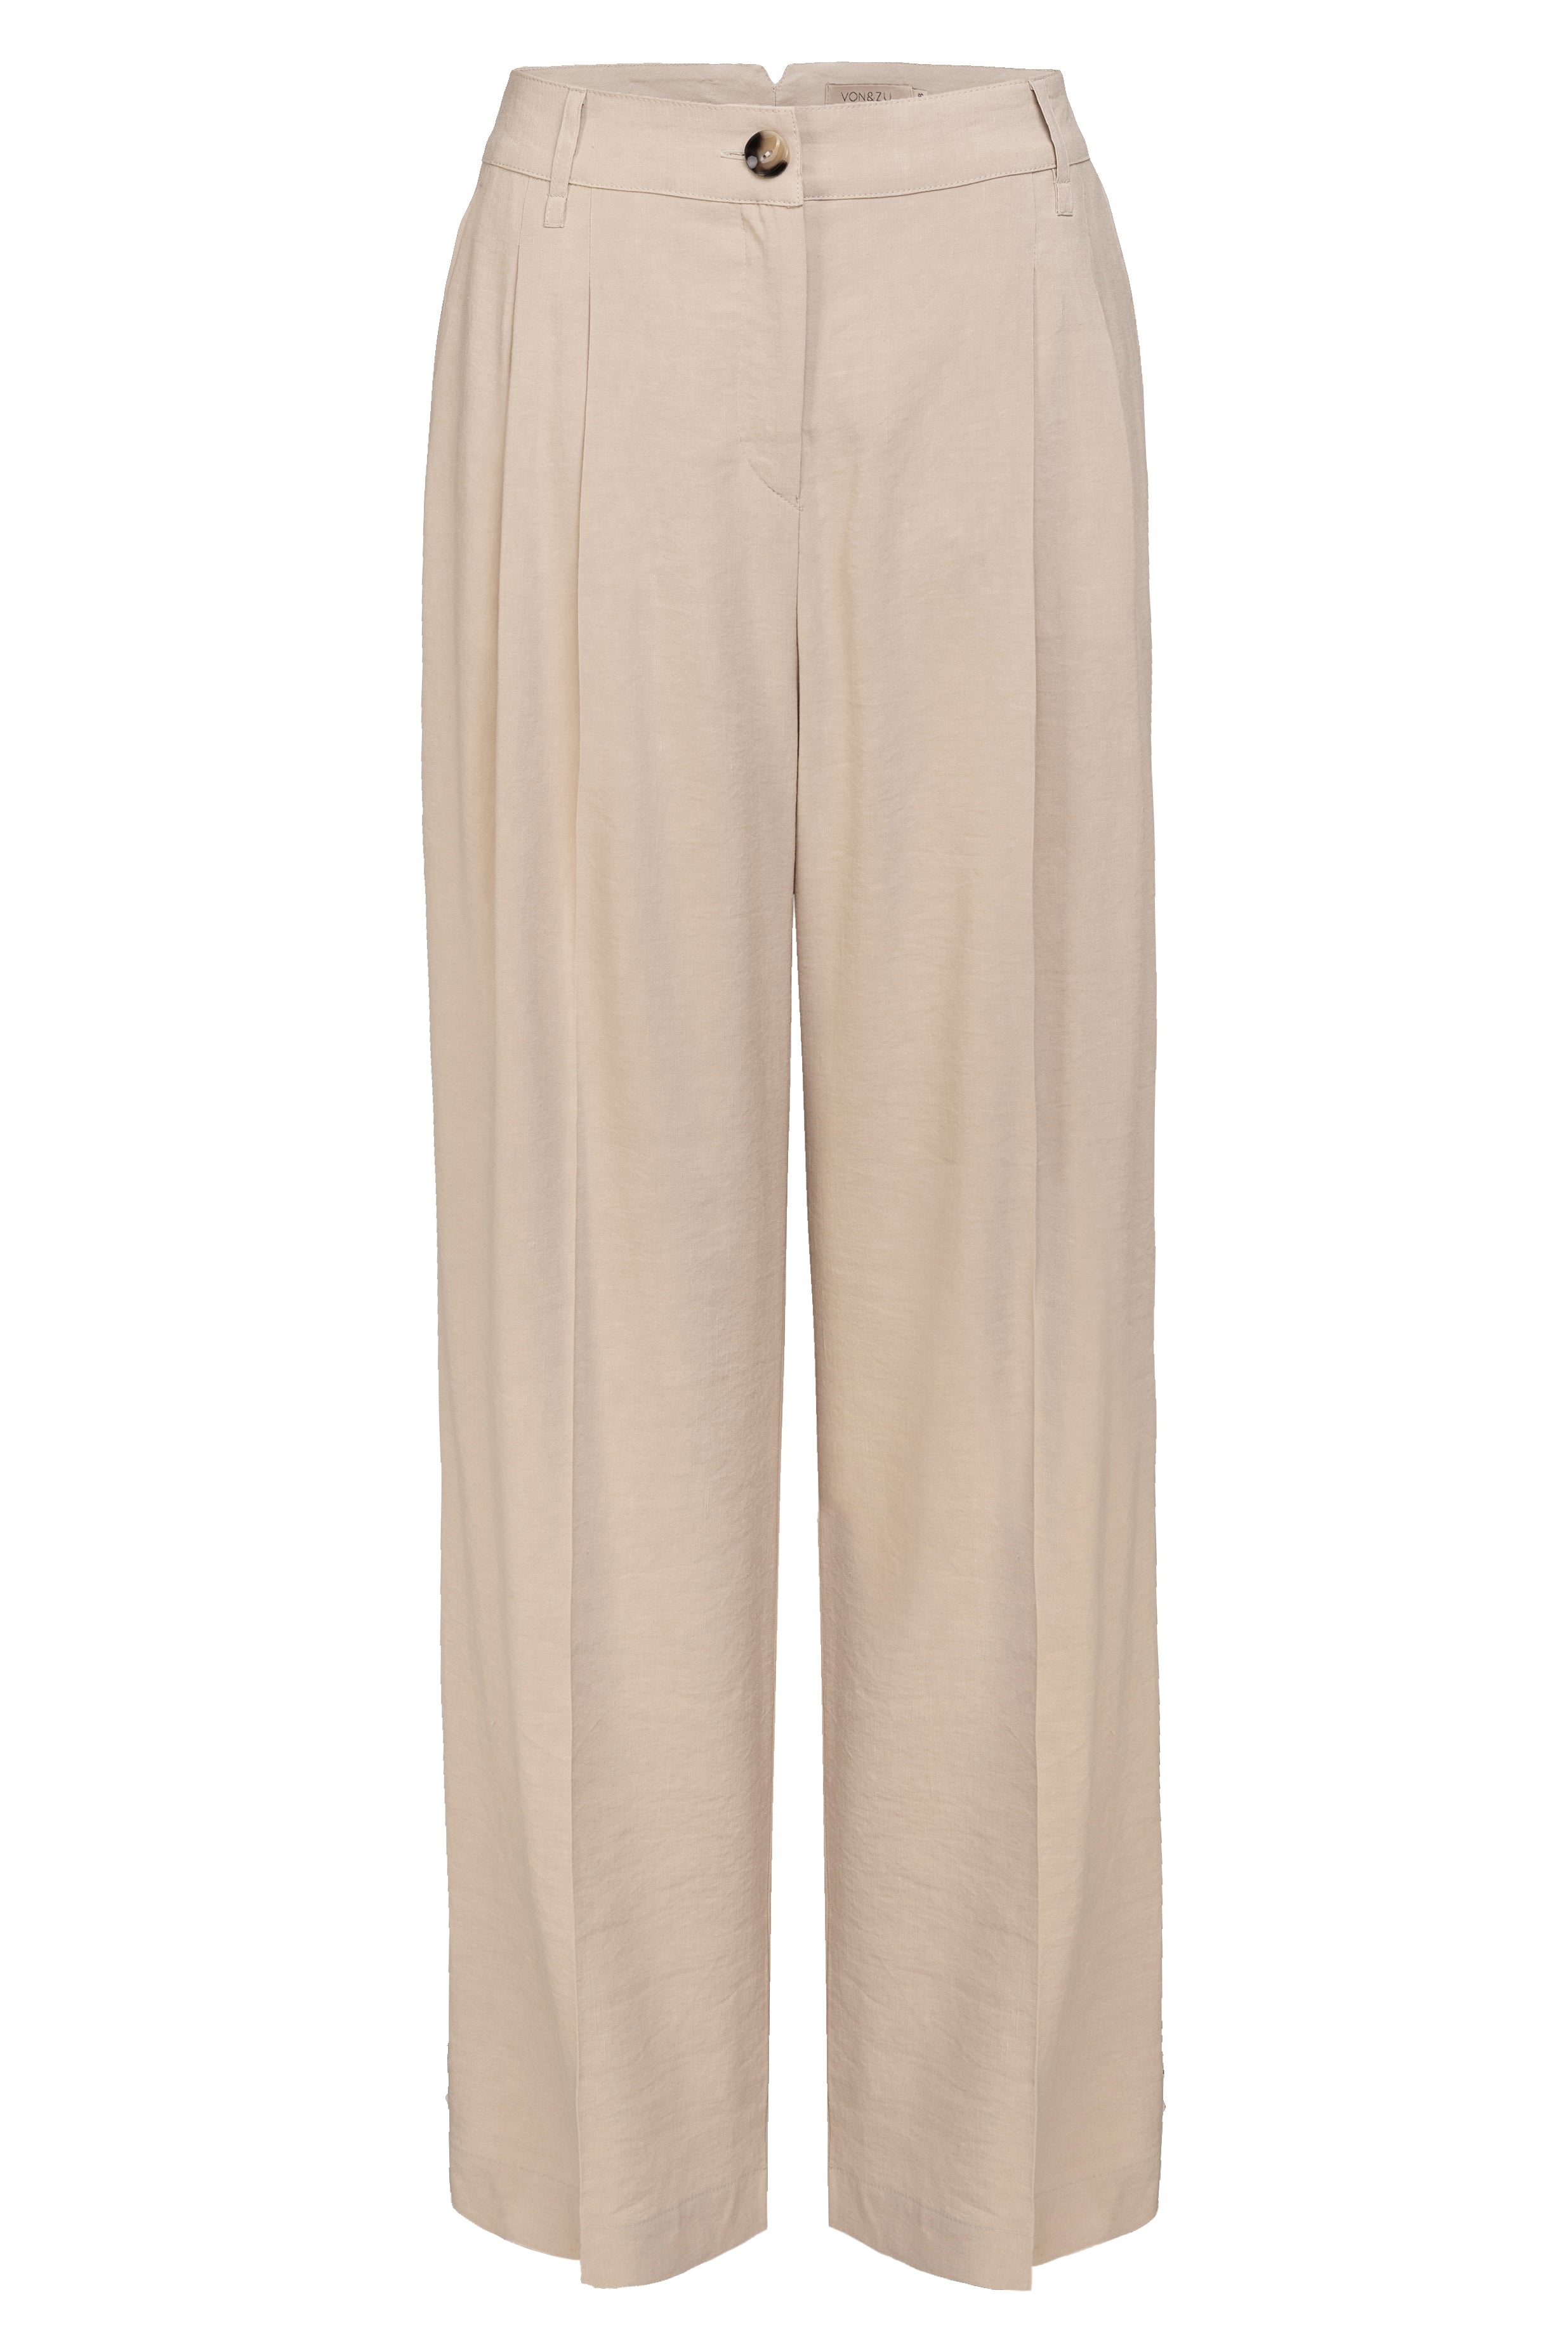 Linen pants with pleats